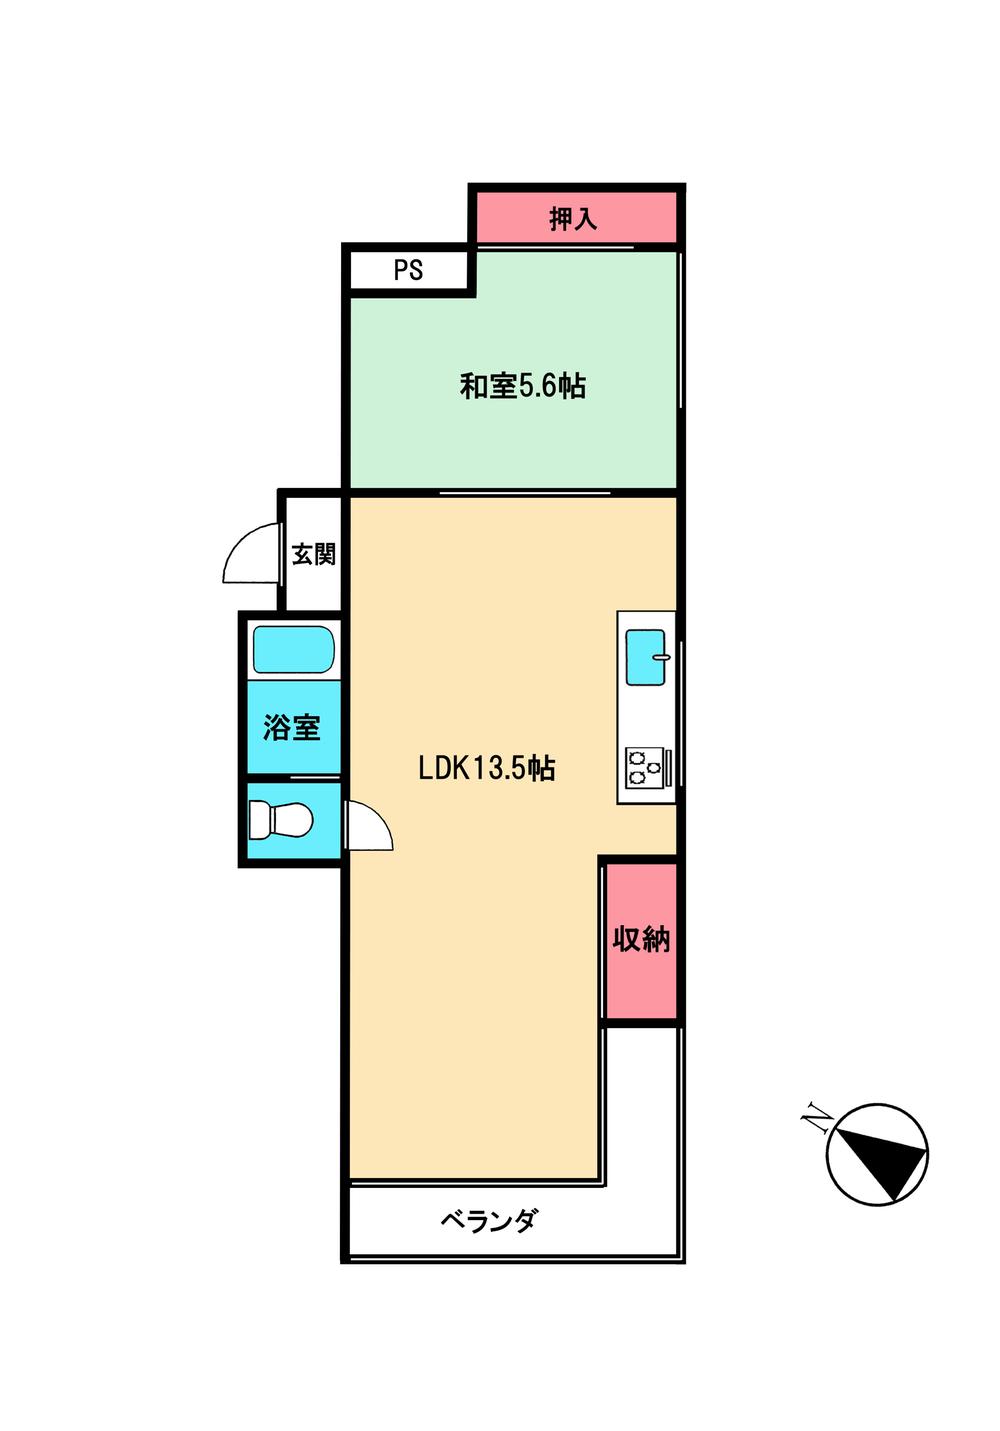 Floor plan. 1LDK, Price 4.8 million yen, Occupied area 37.27 sq m